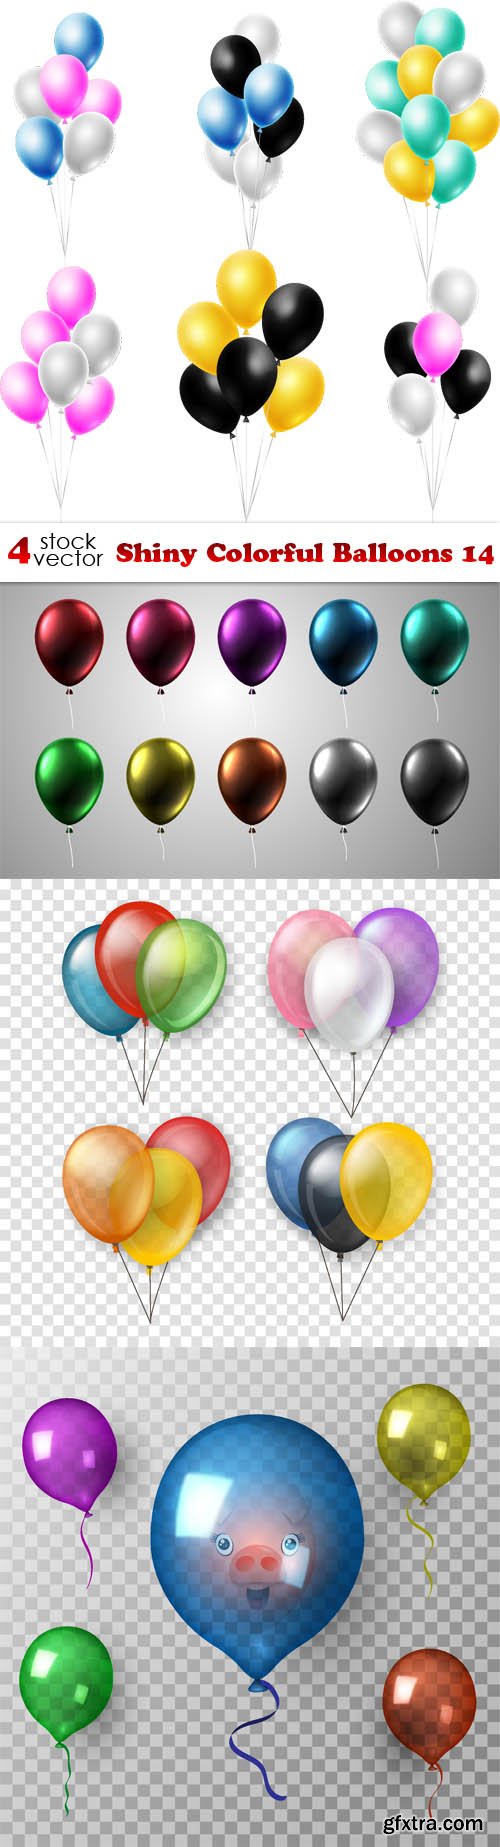 Vectors - Shiny Colorful Balloons 14